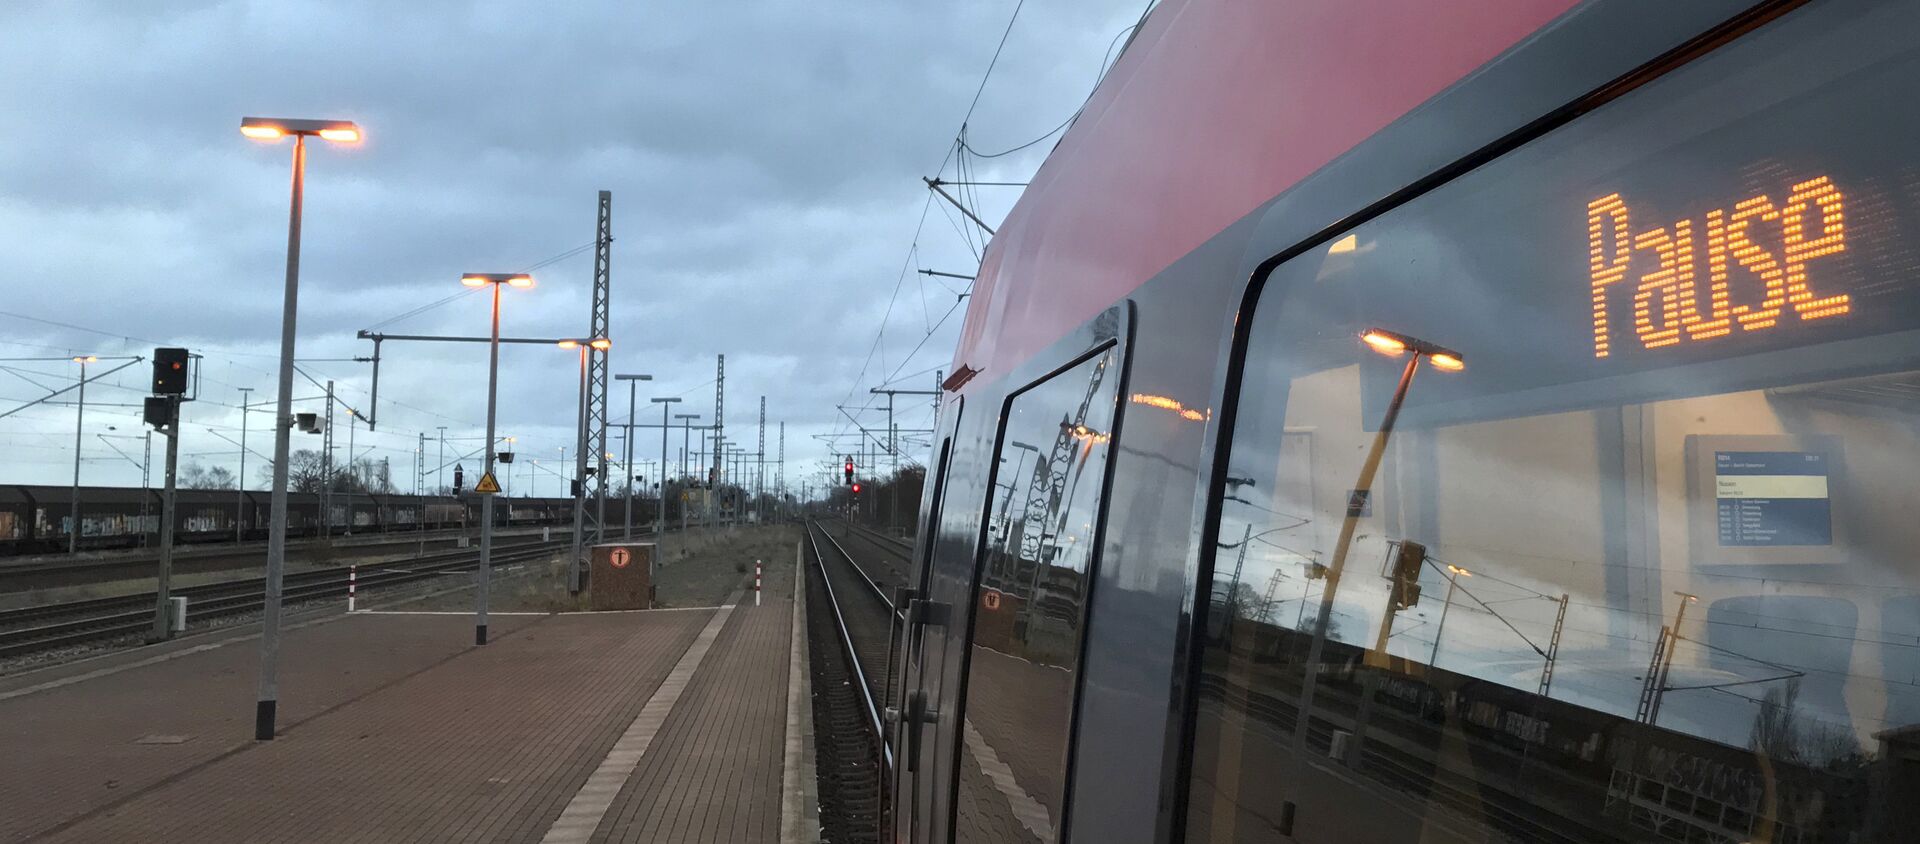 A train sits in the empty station in Nauen, west of Berlin, Germany, Monday, Dec. 10, 2018 - Sputnik International, 1920, 26.12.2018